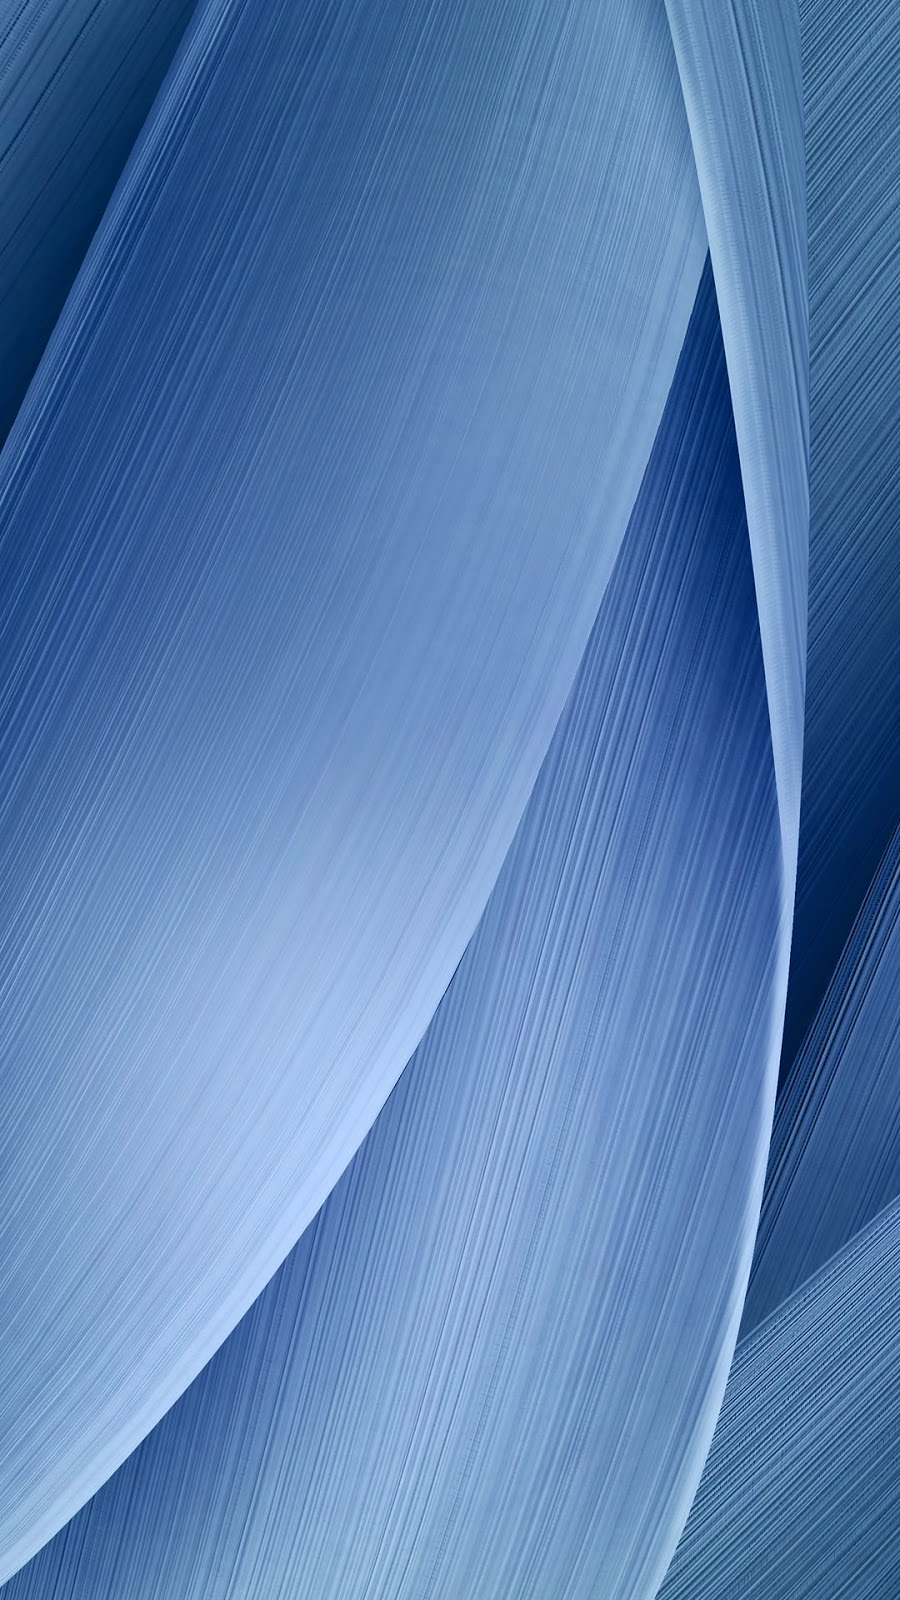 asus zenfone 2 laser wallpaper,blue,azure,wave,electric blue,graphics